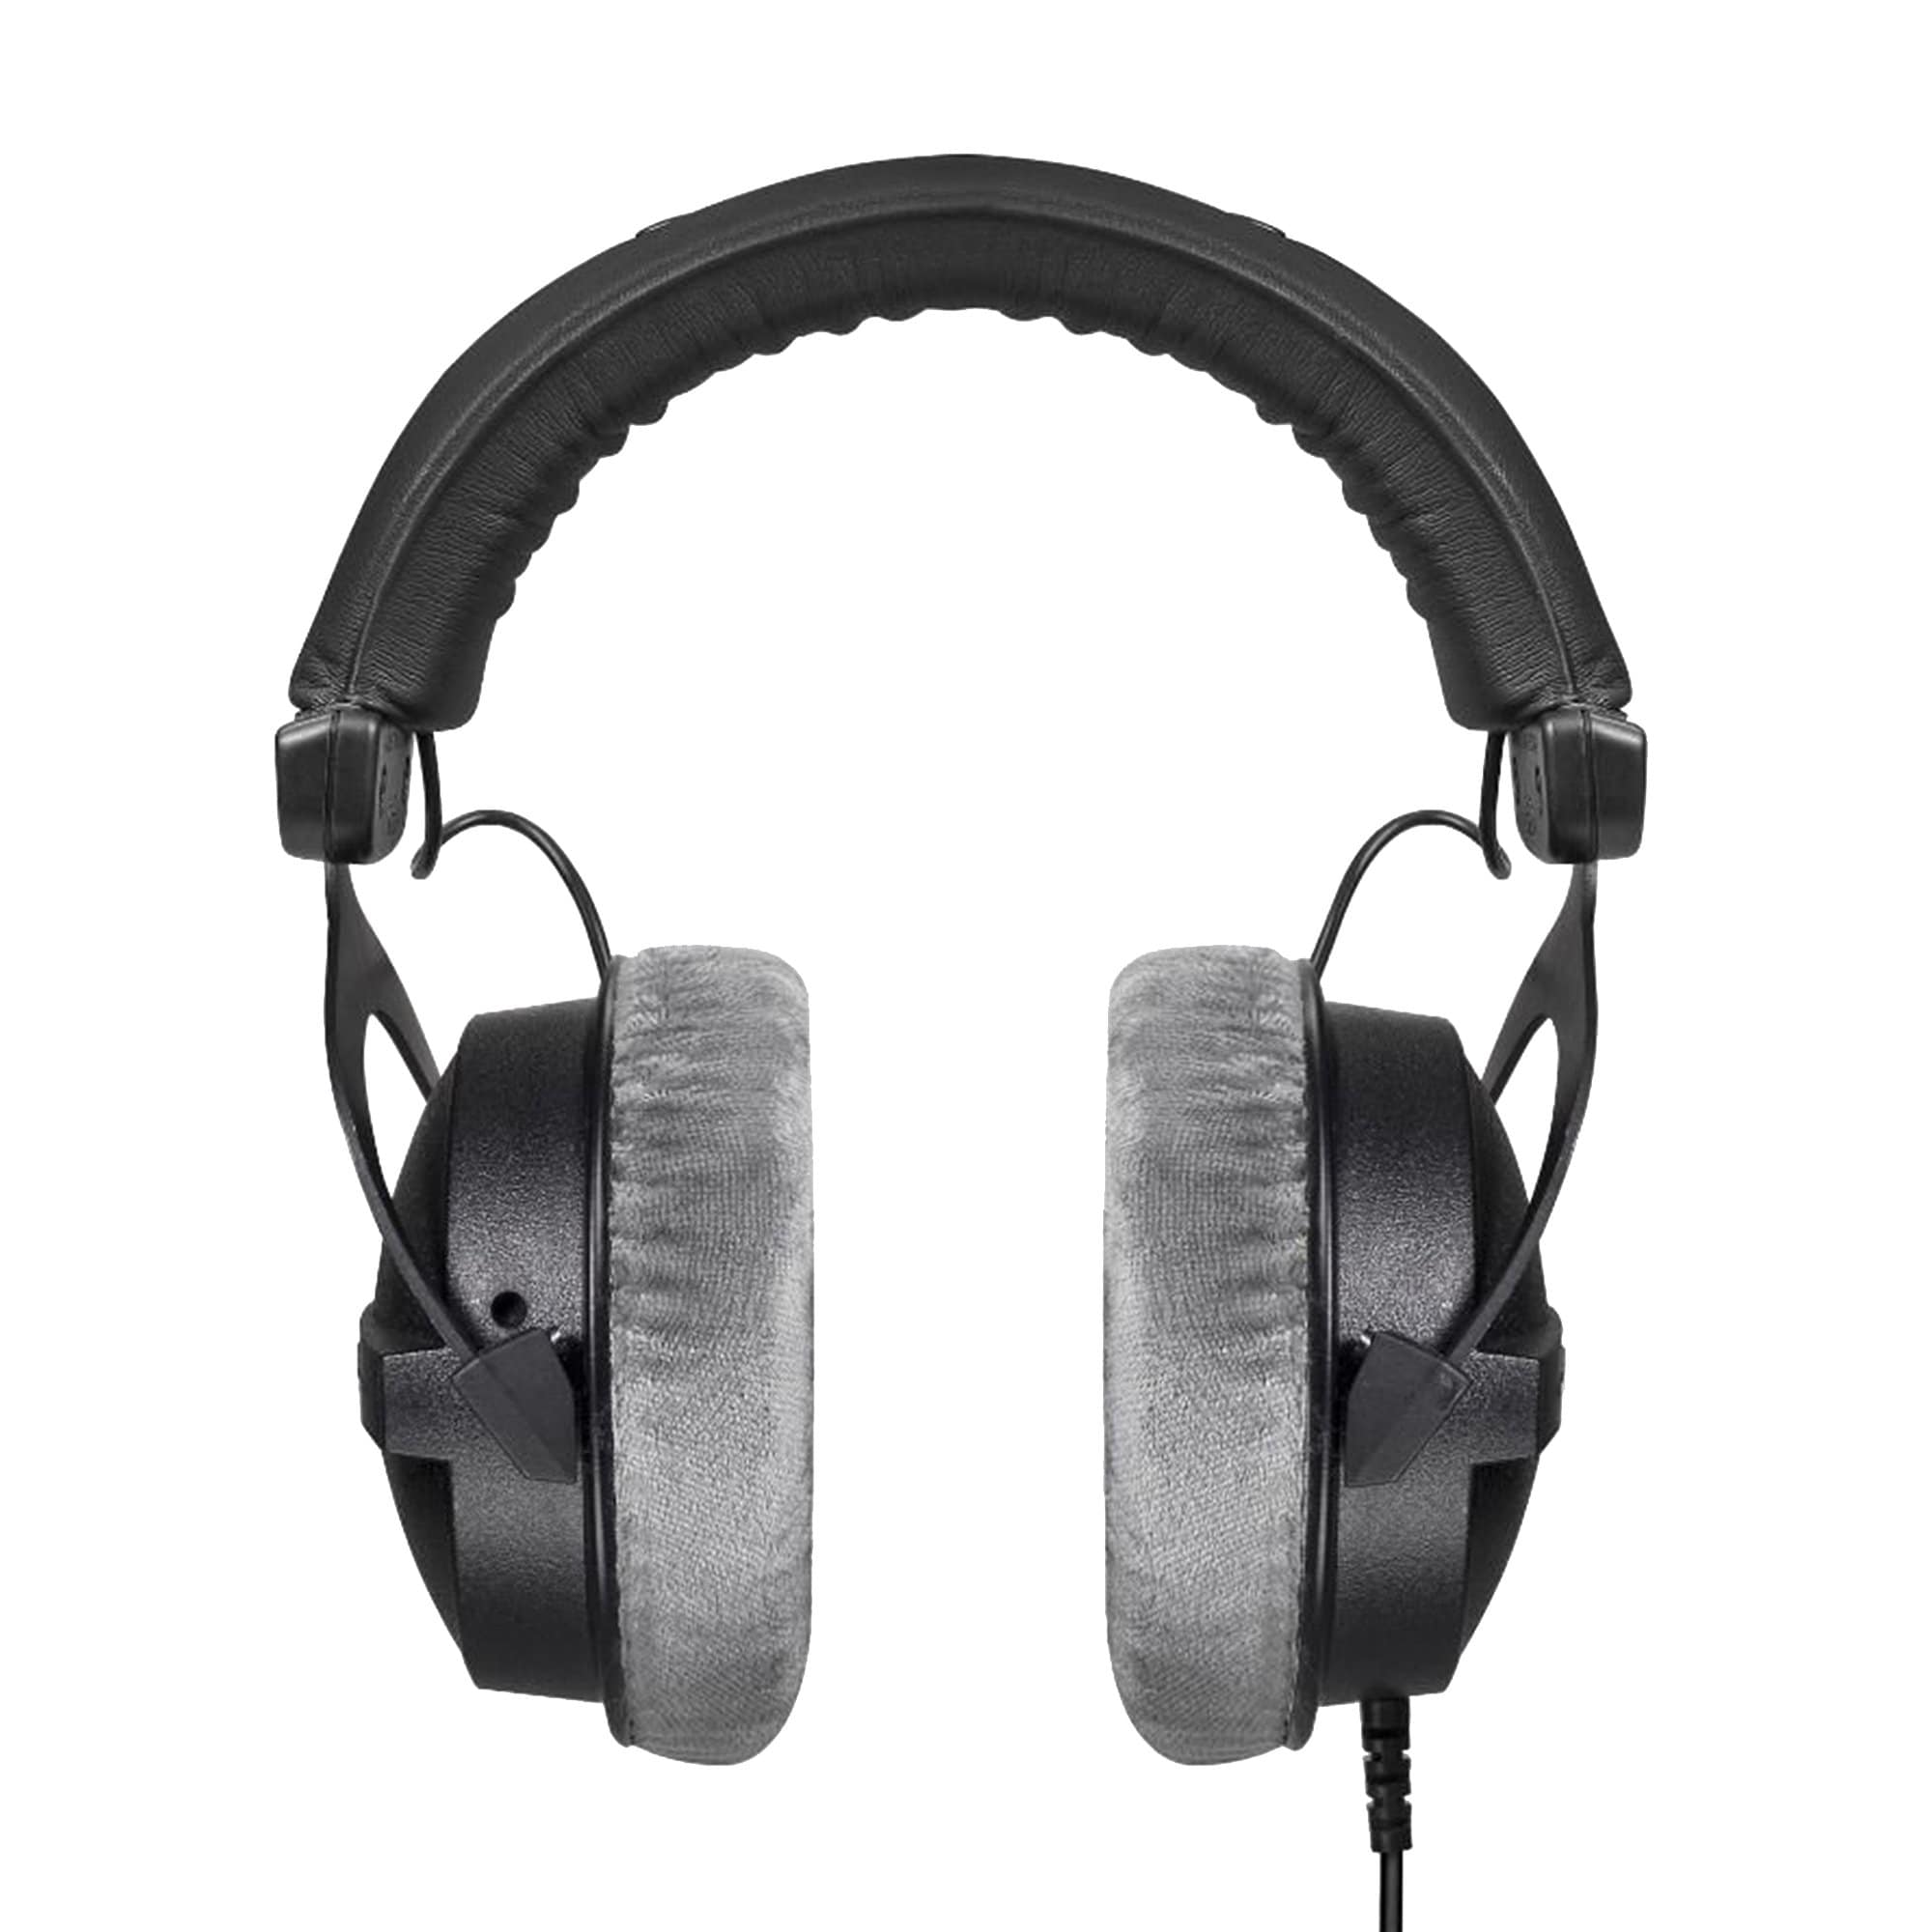 Beyerdynamic DT 770 Pro 80 ohm Closed-back Headphones with